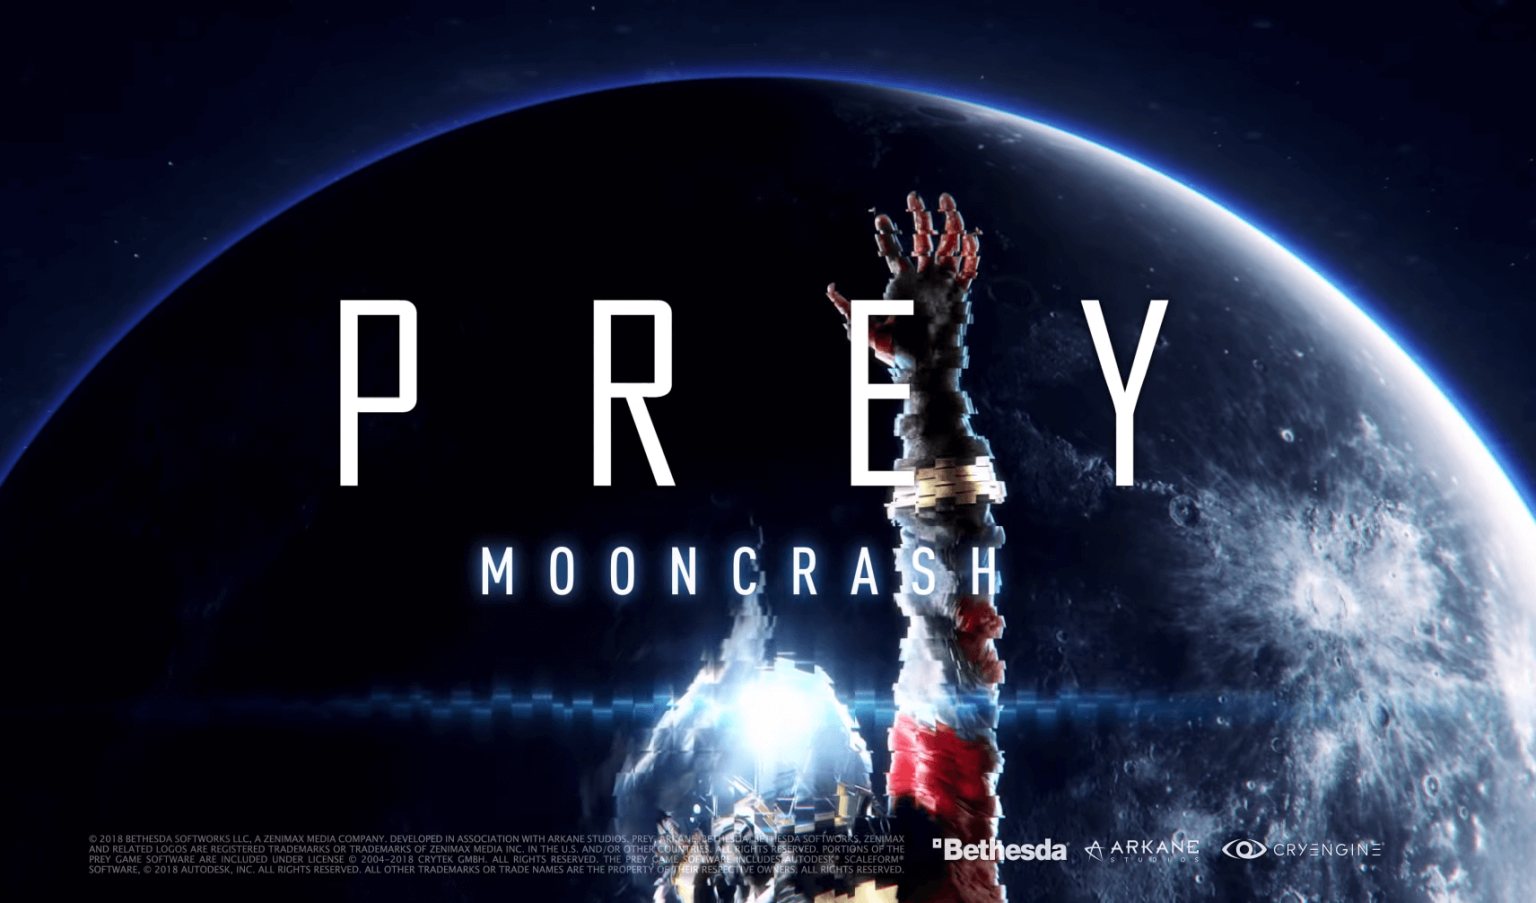 Prey: Mooncrash